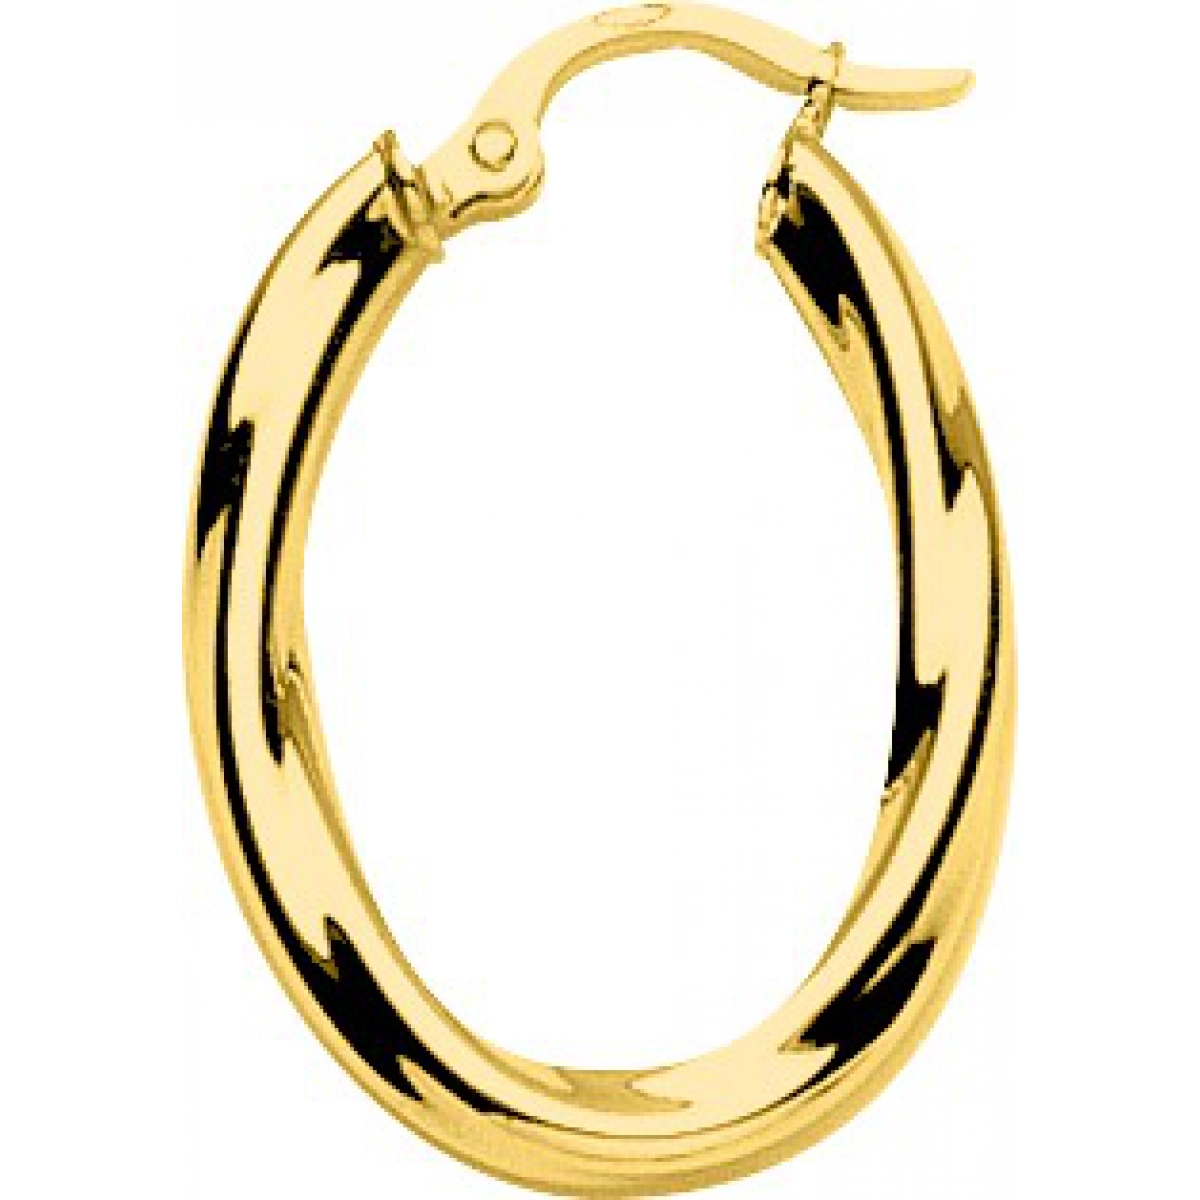 Hoops earrings pair gold plated Brass  Lua Blanca  135148.0